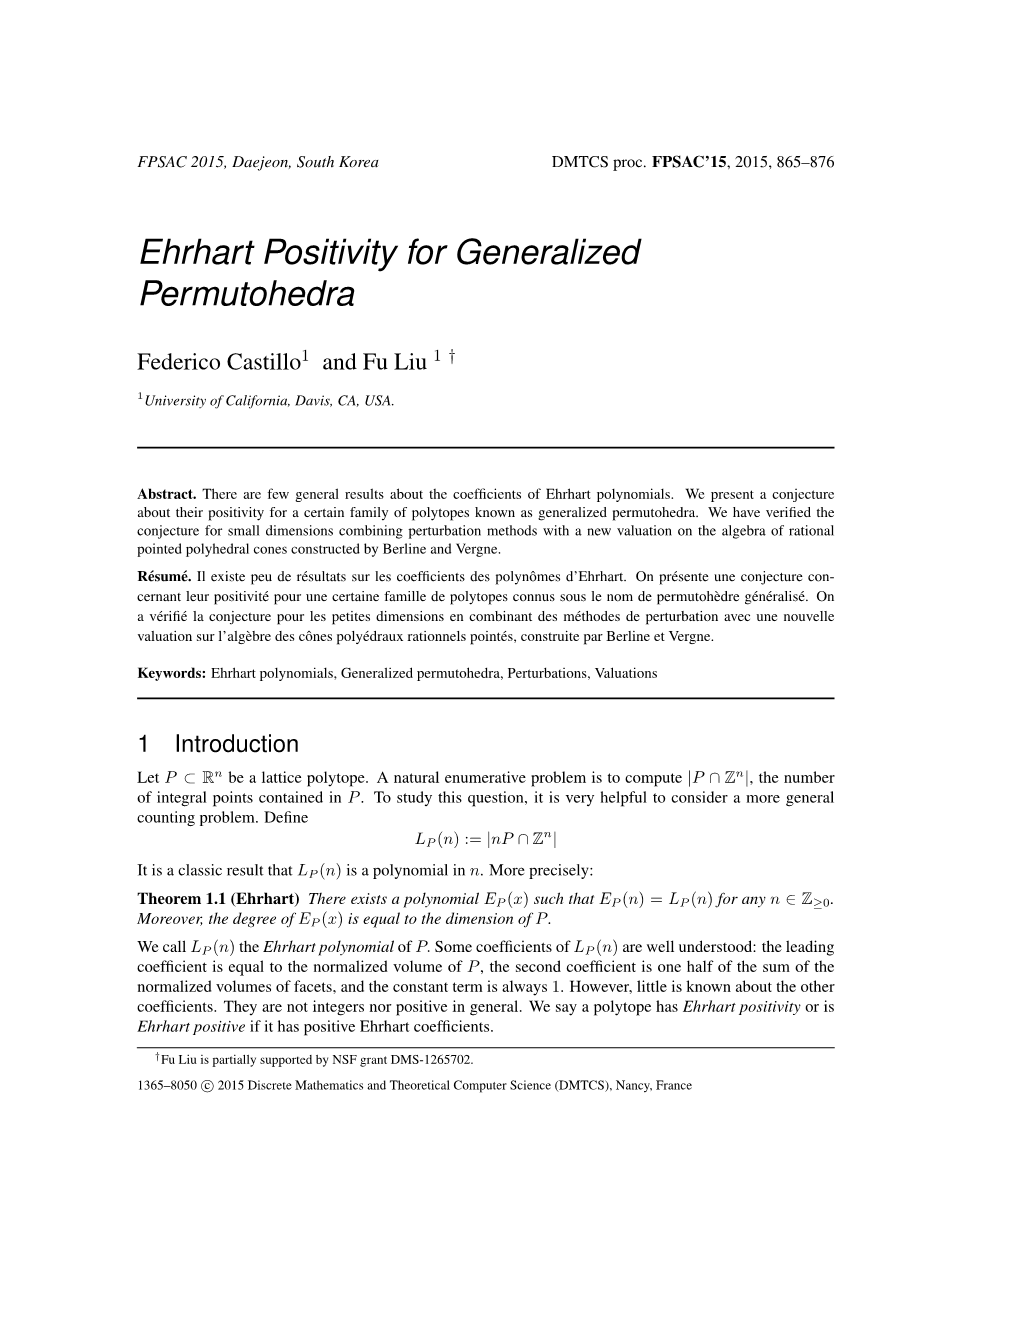 Ehrhart Positivity for Generalized Permutohedra